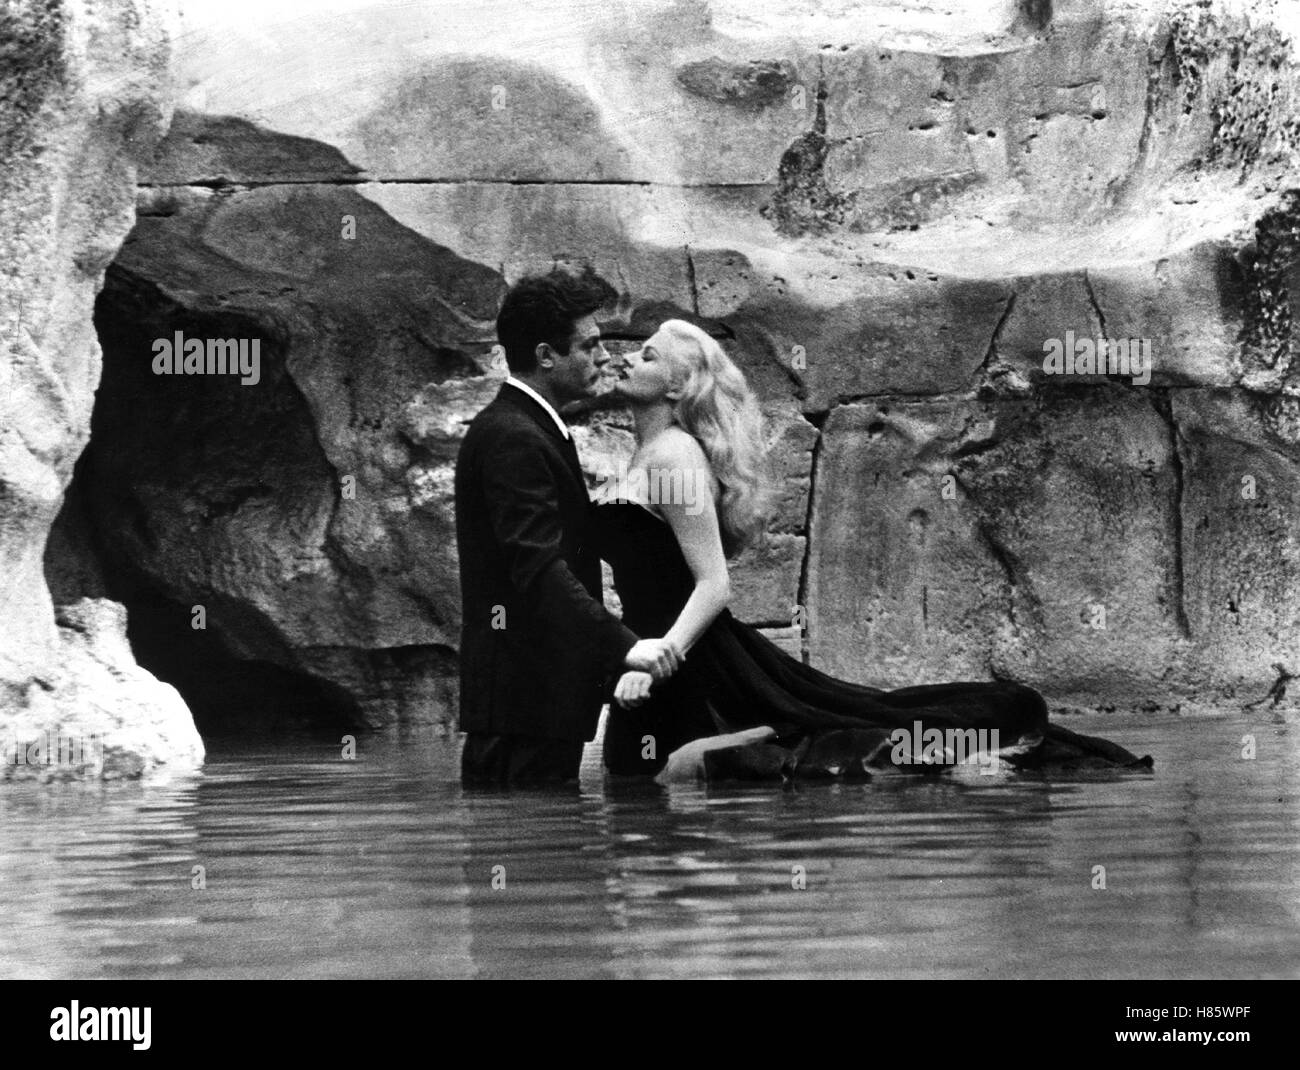 Süße Das Leben (LA DOLCE VITA)-F 1959, Regie: Federico Fellini, Marcello Mastroianni, Anita Ekberg, Stichwort: Paar, Trevi-Brunnen, Wasser Foto de stock